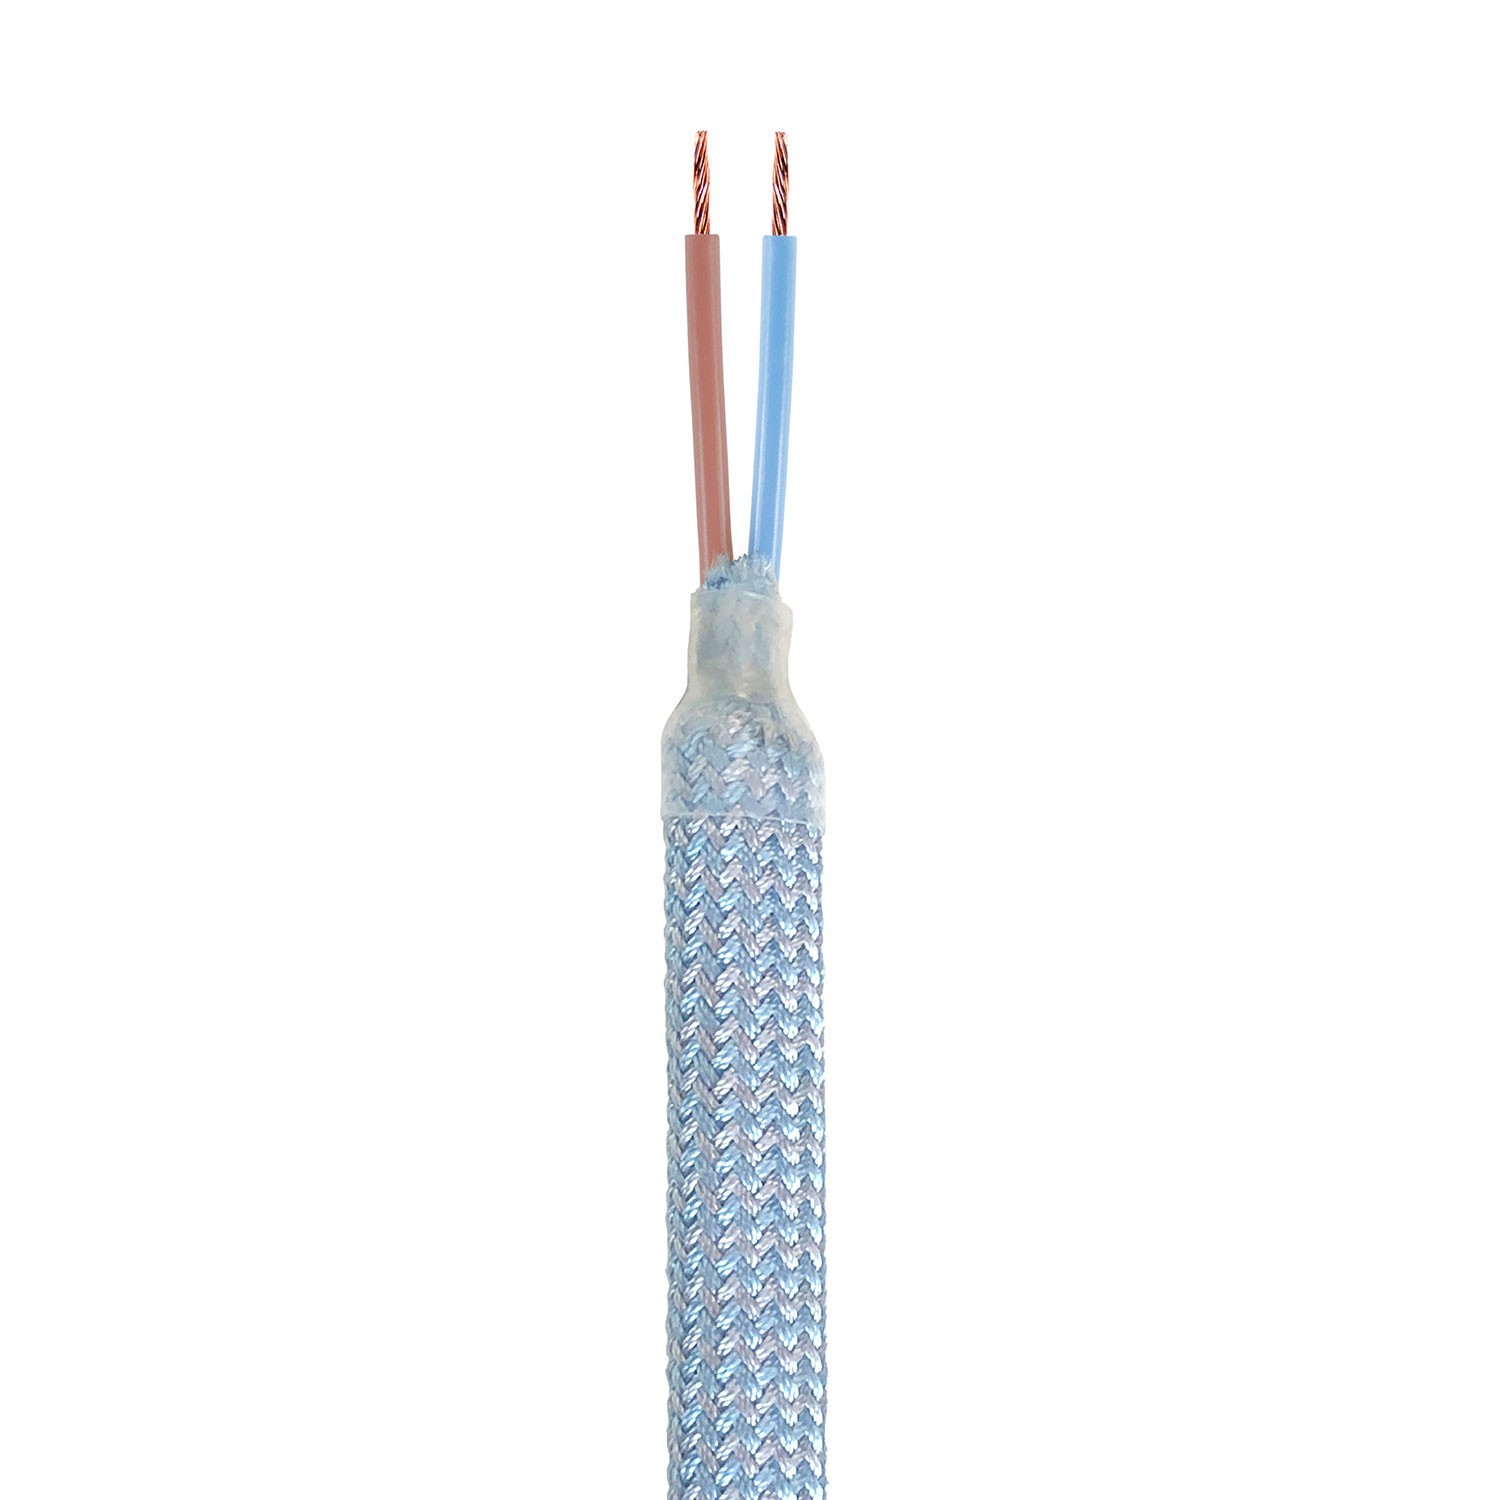 Kit Creative Flex fleksibelt rør i babyblå RM76 tekstilforing med metalterminaler